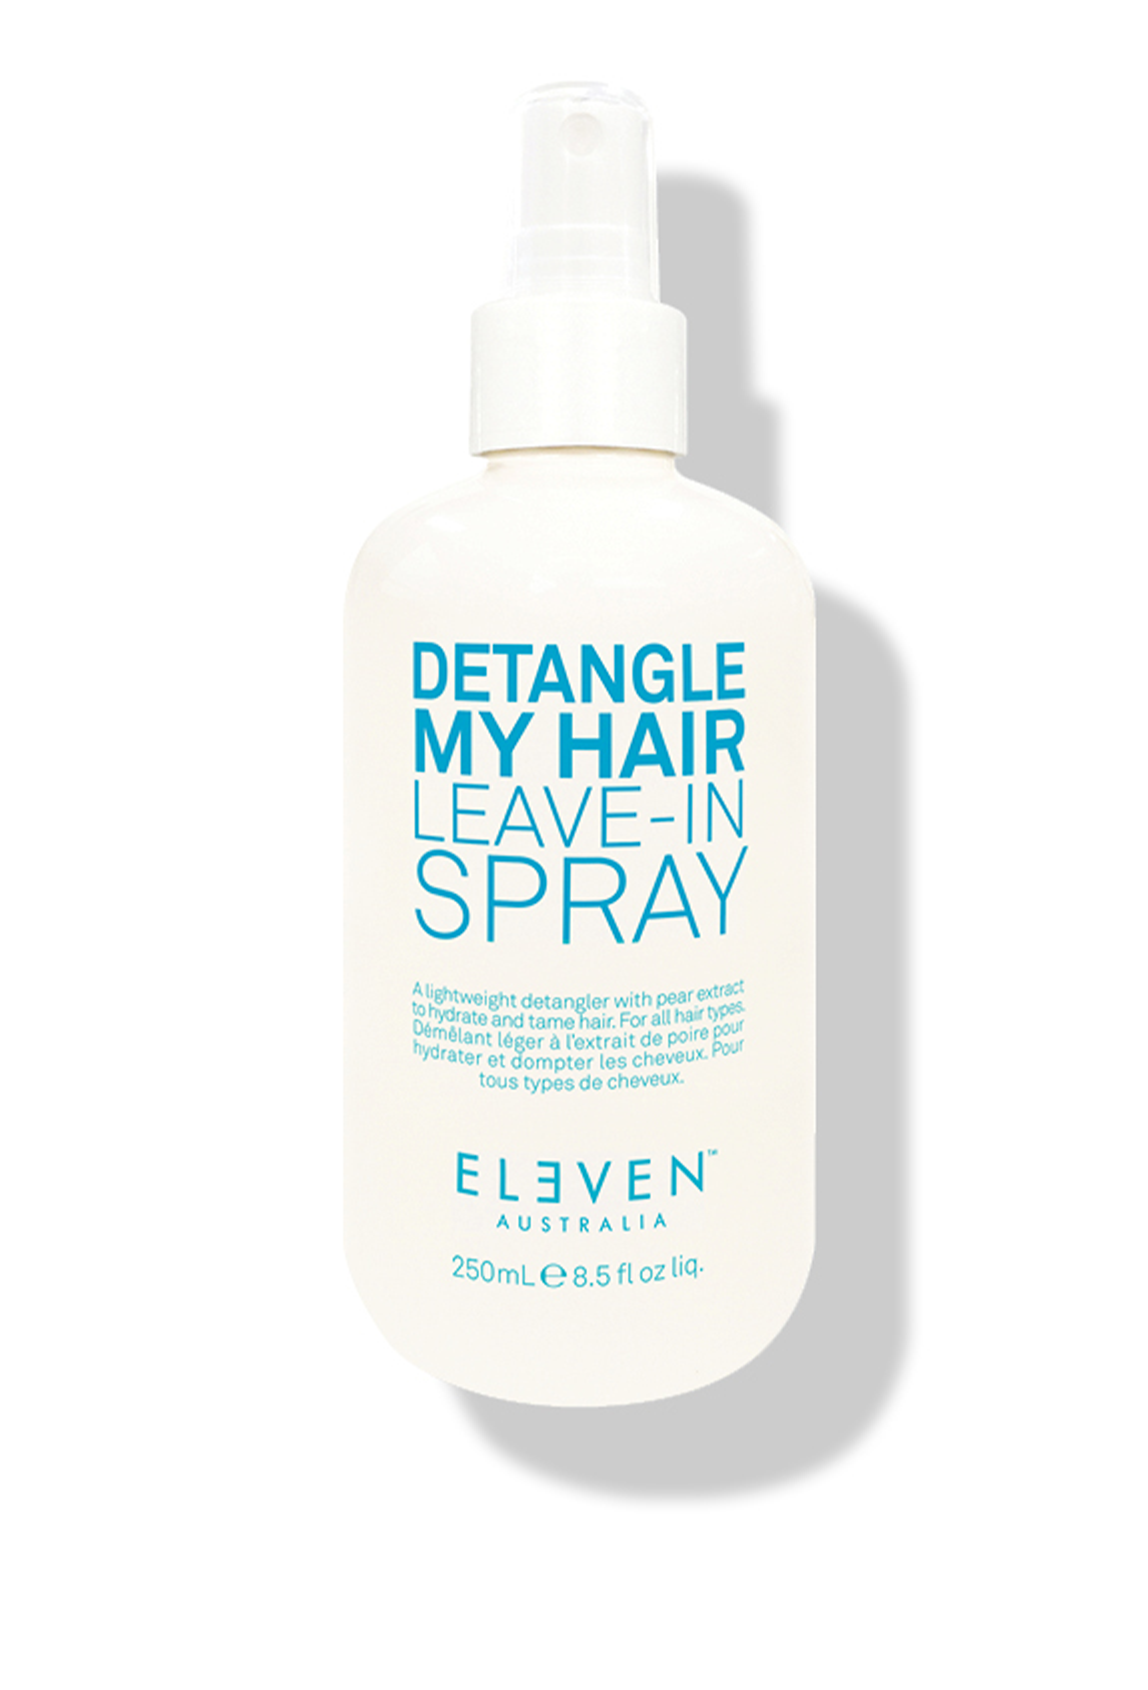 Eleven Australia detangle my hair leave-in spray